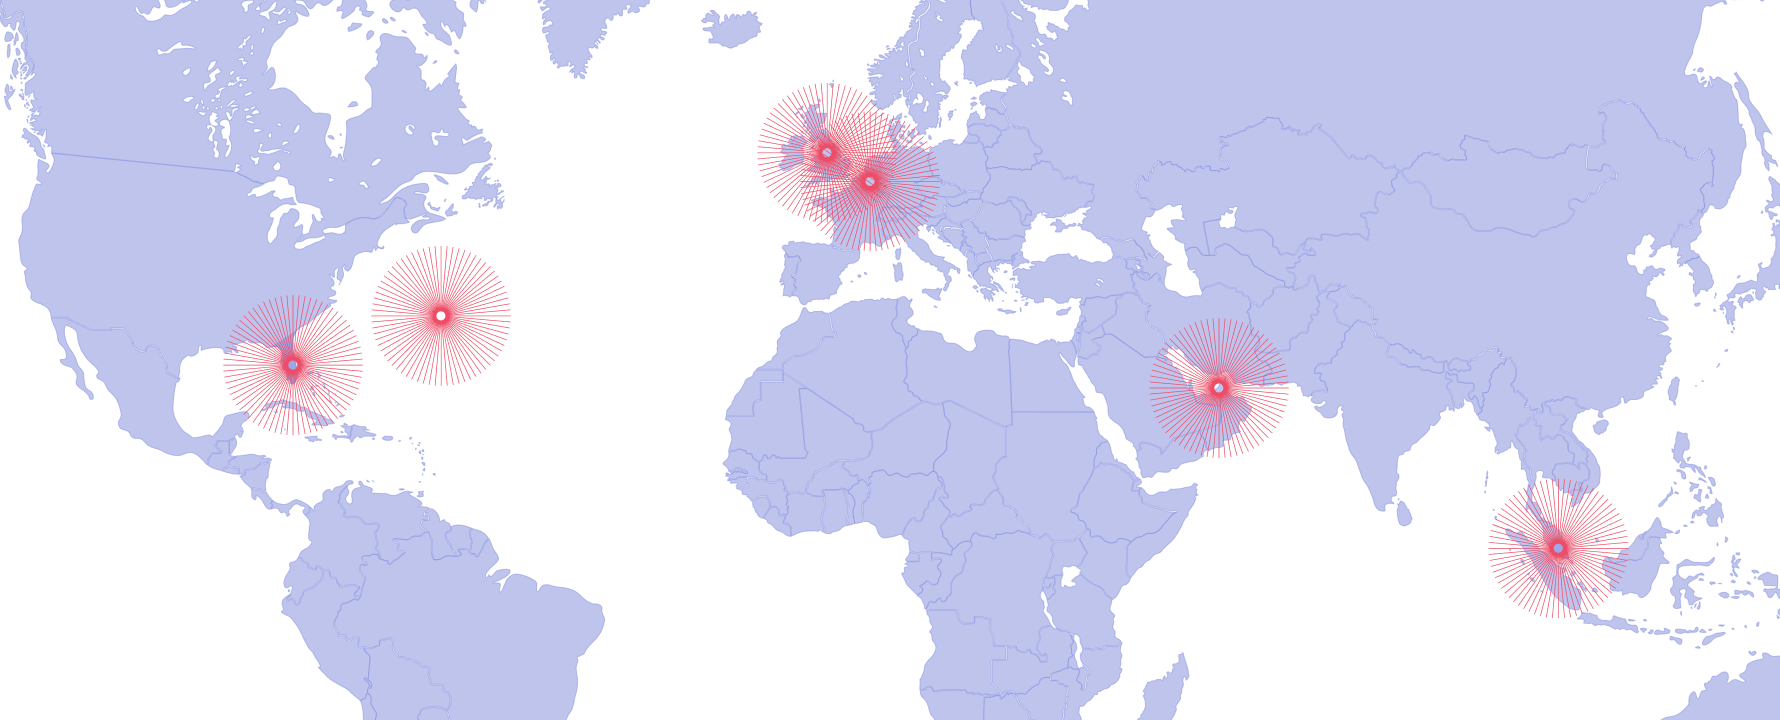 Global hubs map